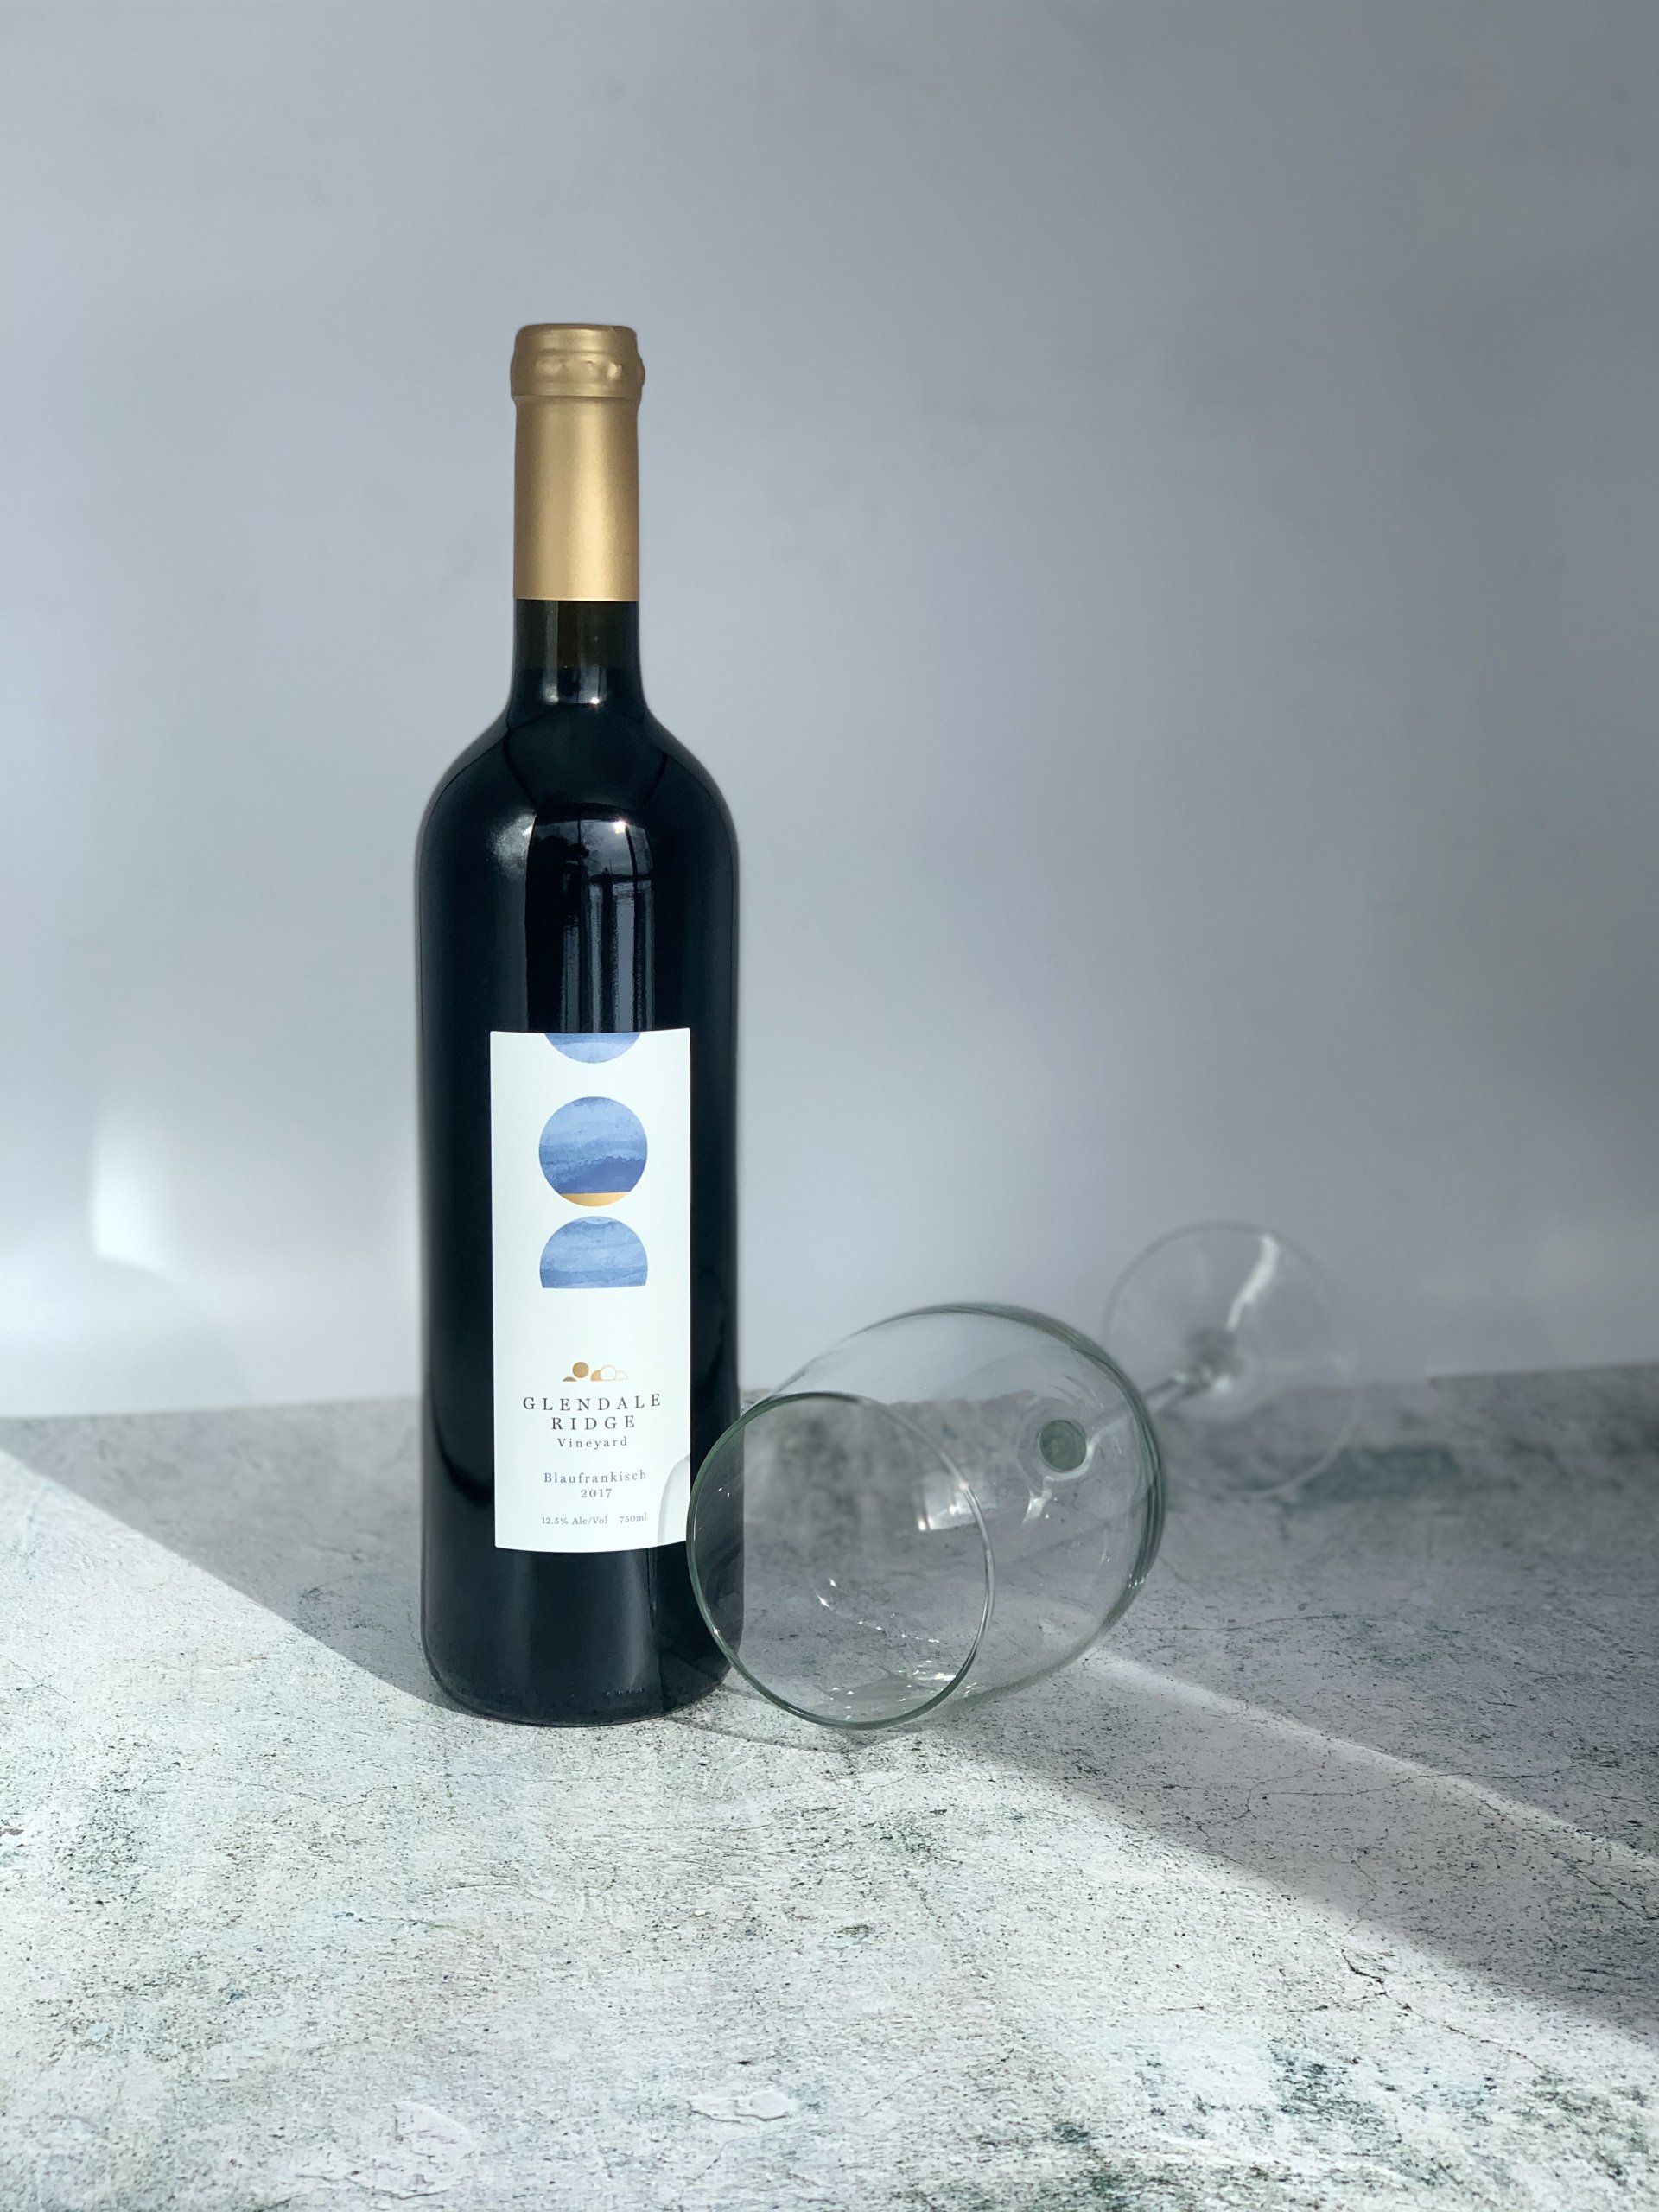 Glendale Ridge wine bottle and glass